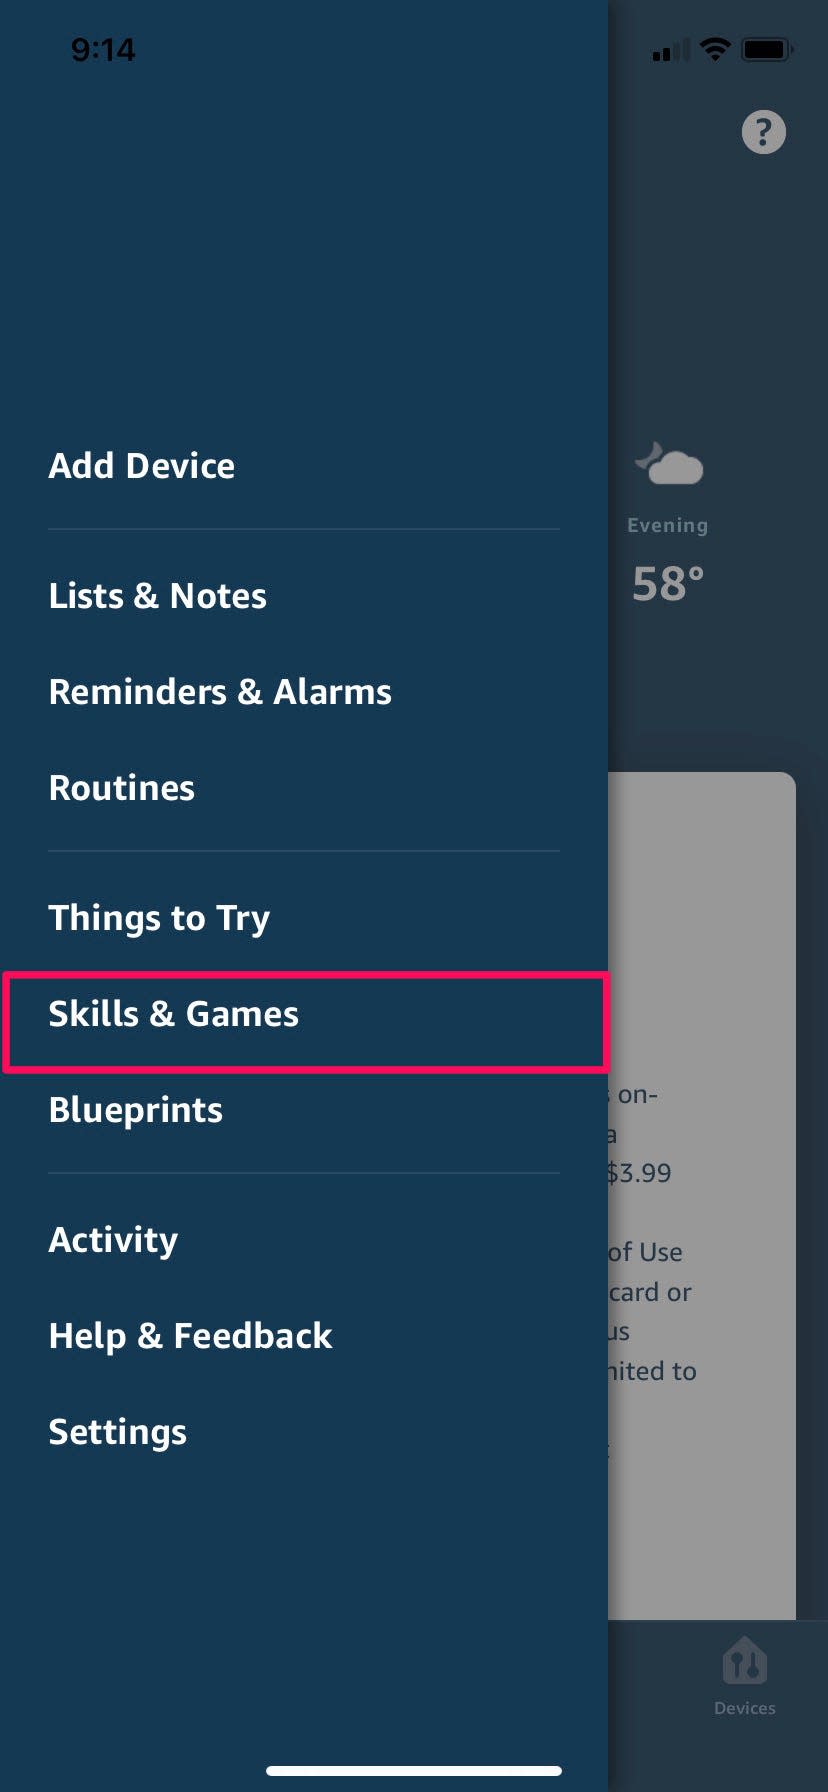 How to add skills to Alexa